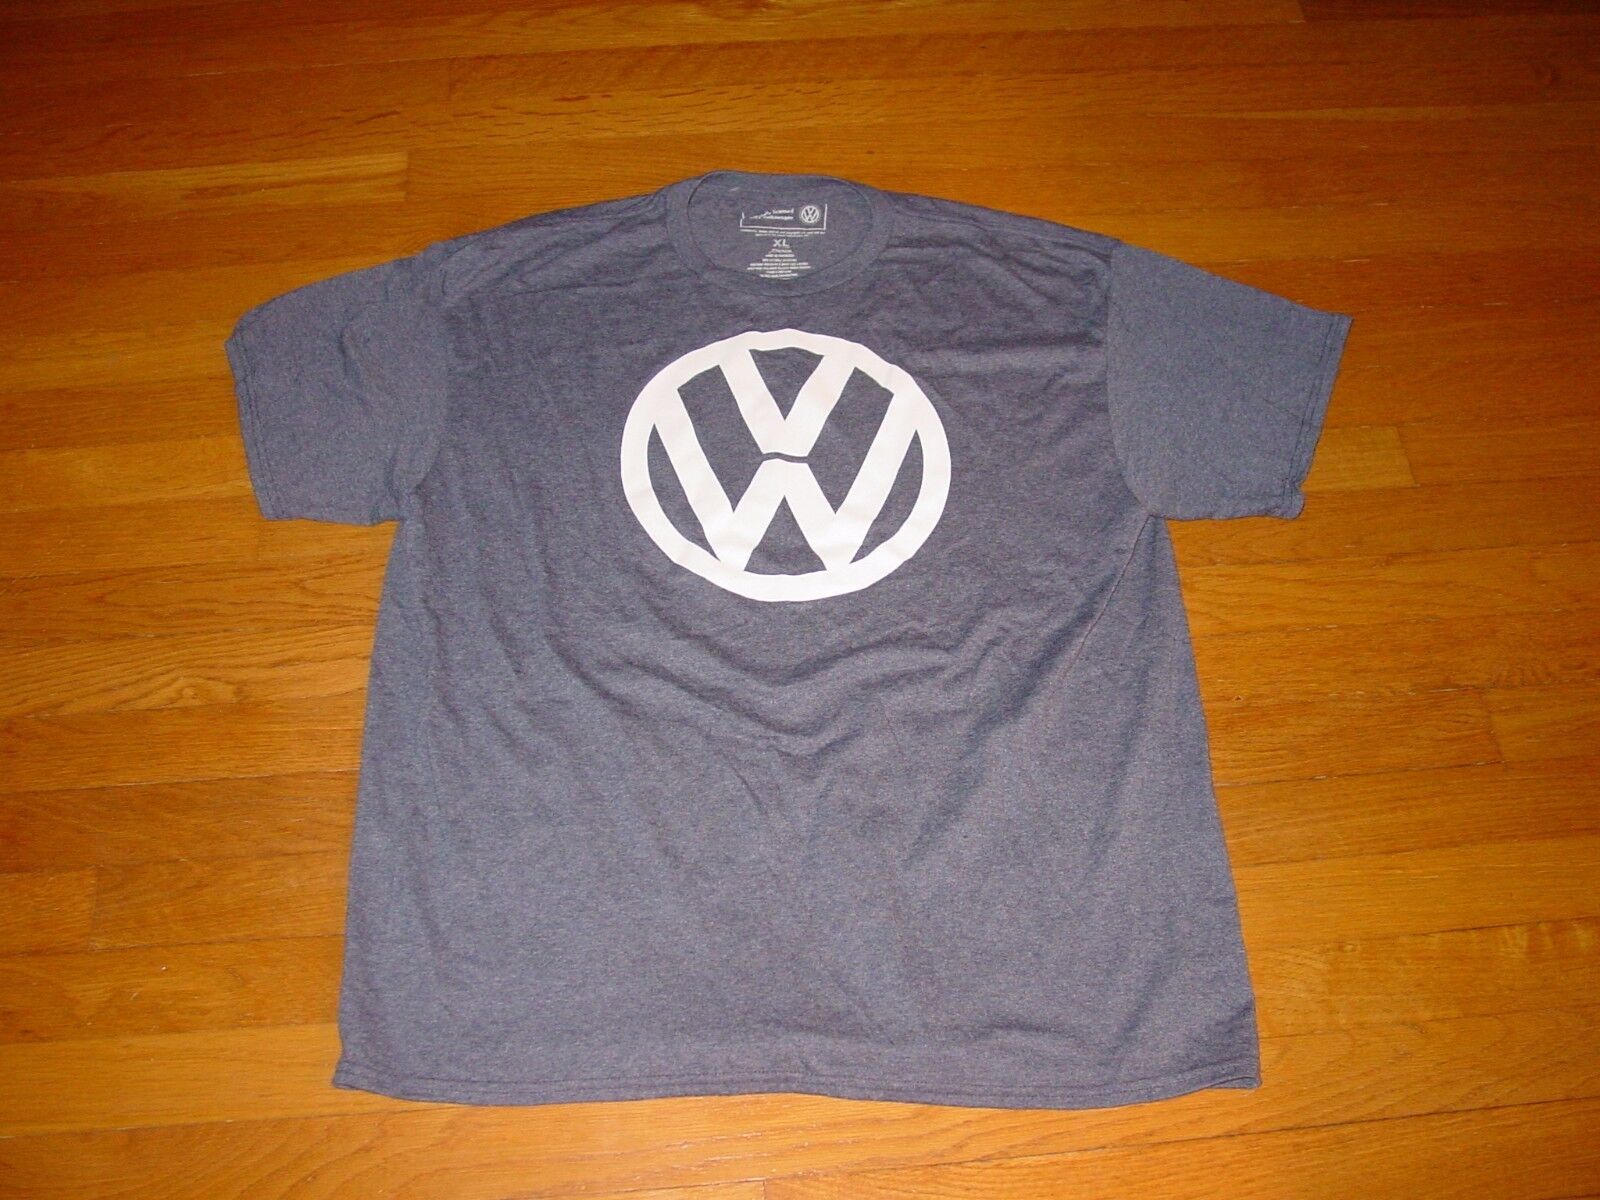 VW Official Licensed  VOLKSWAGEN  Logo   FAHRVERGNUGEN  T-Shirt NEW .....  SMALL